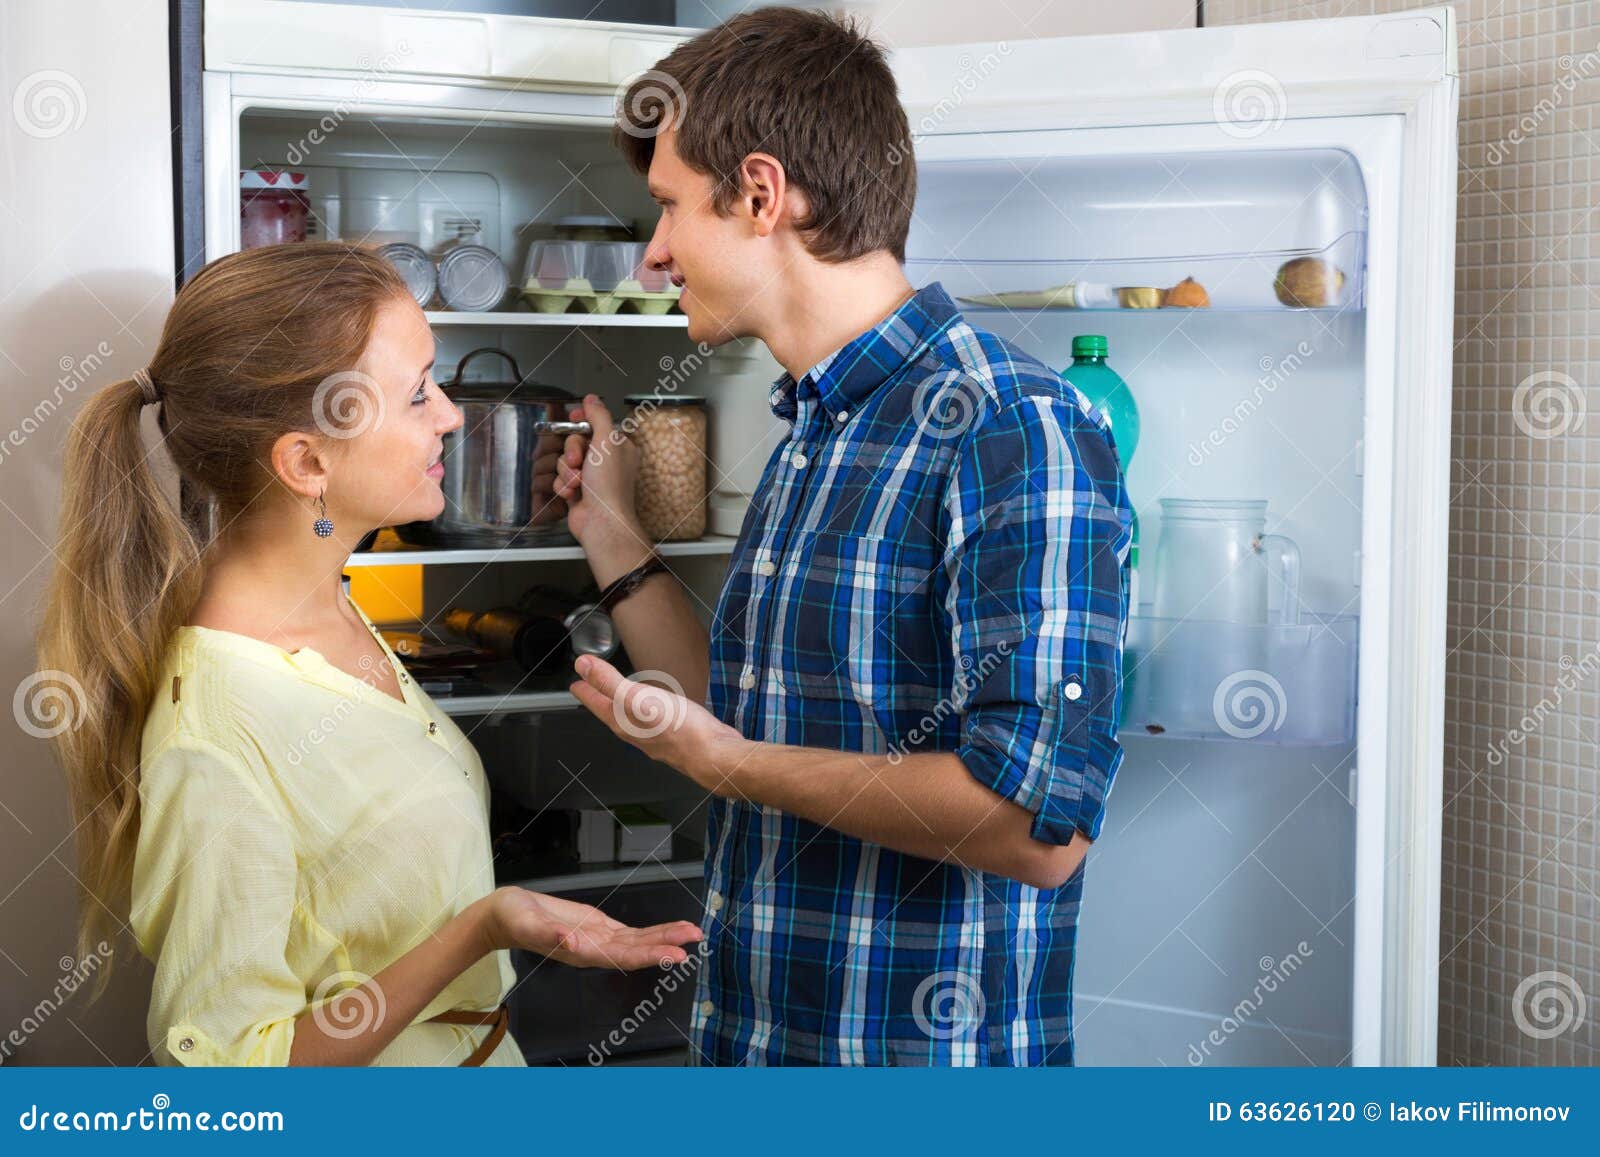 young couple standing near fridge